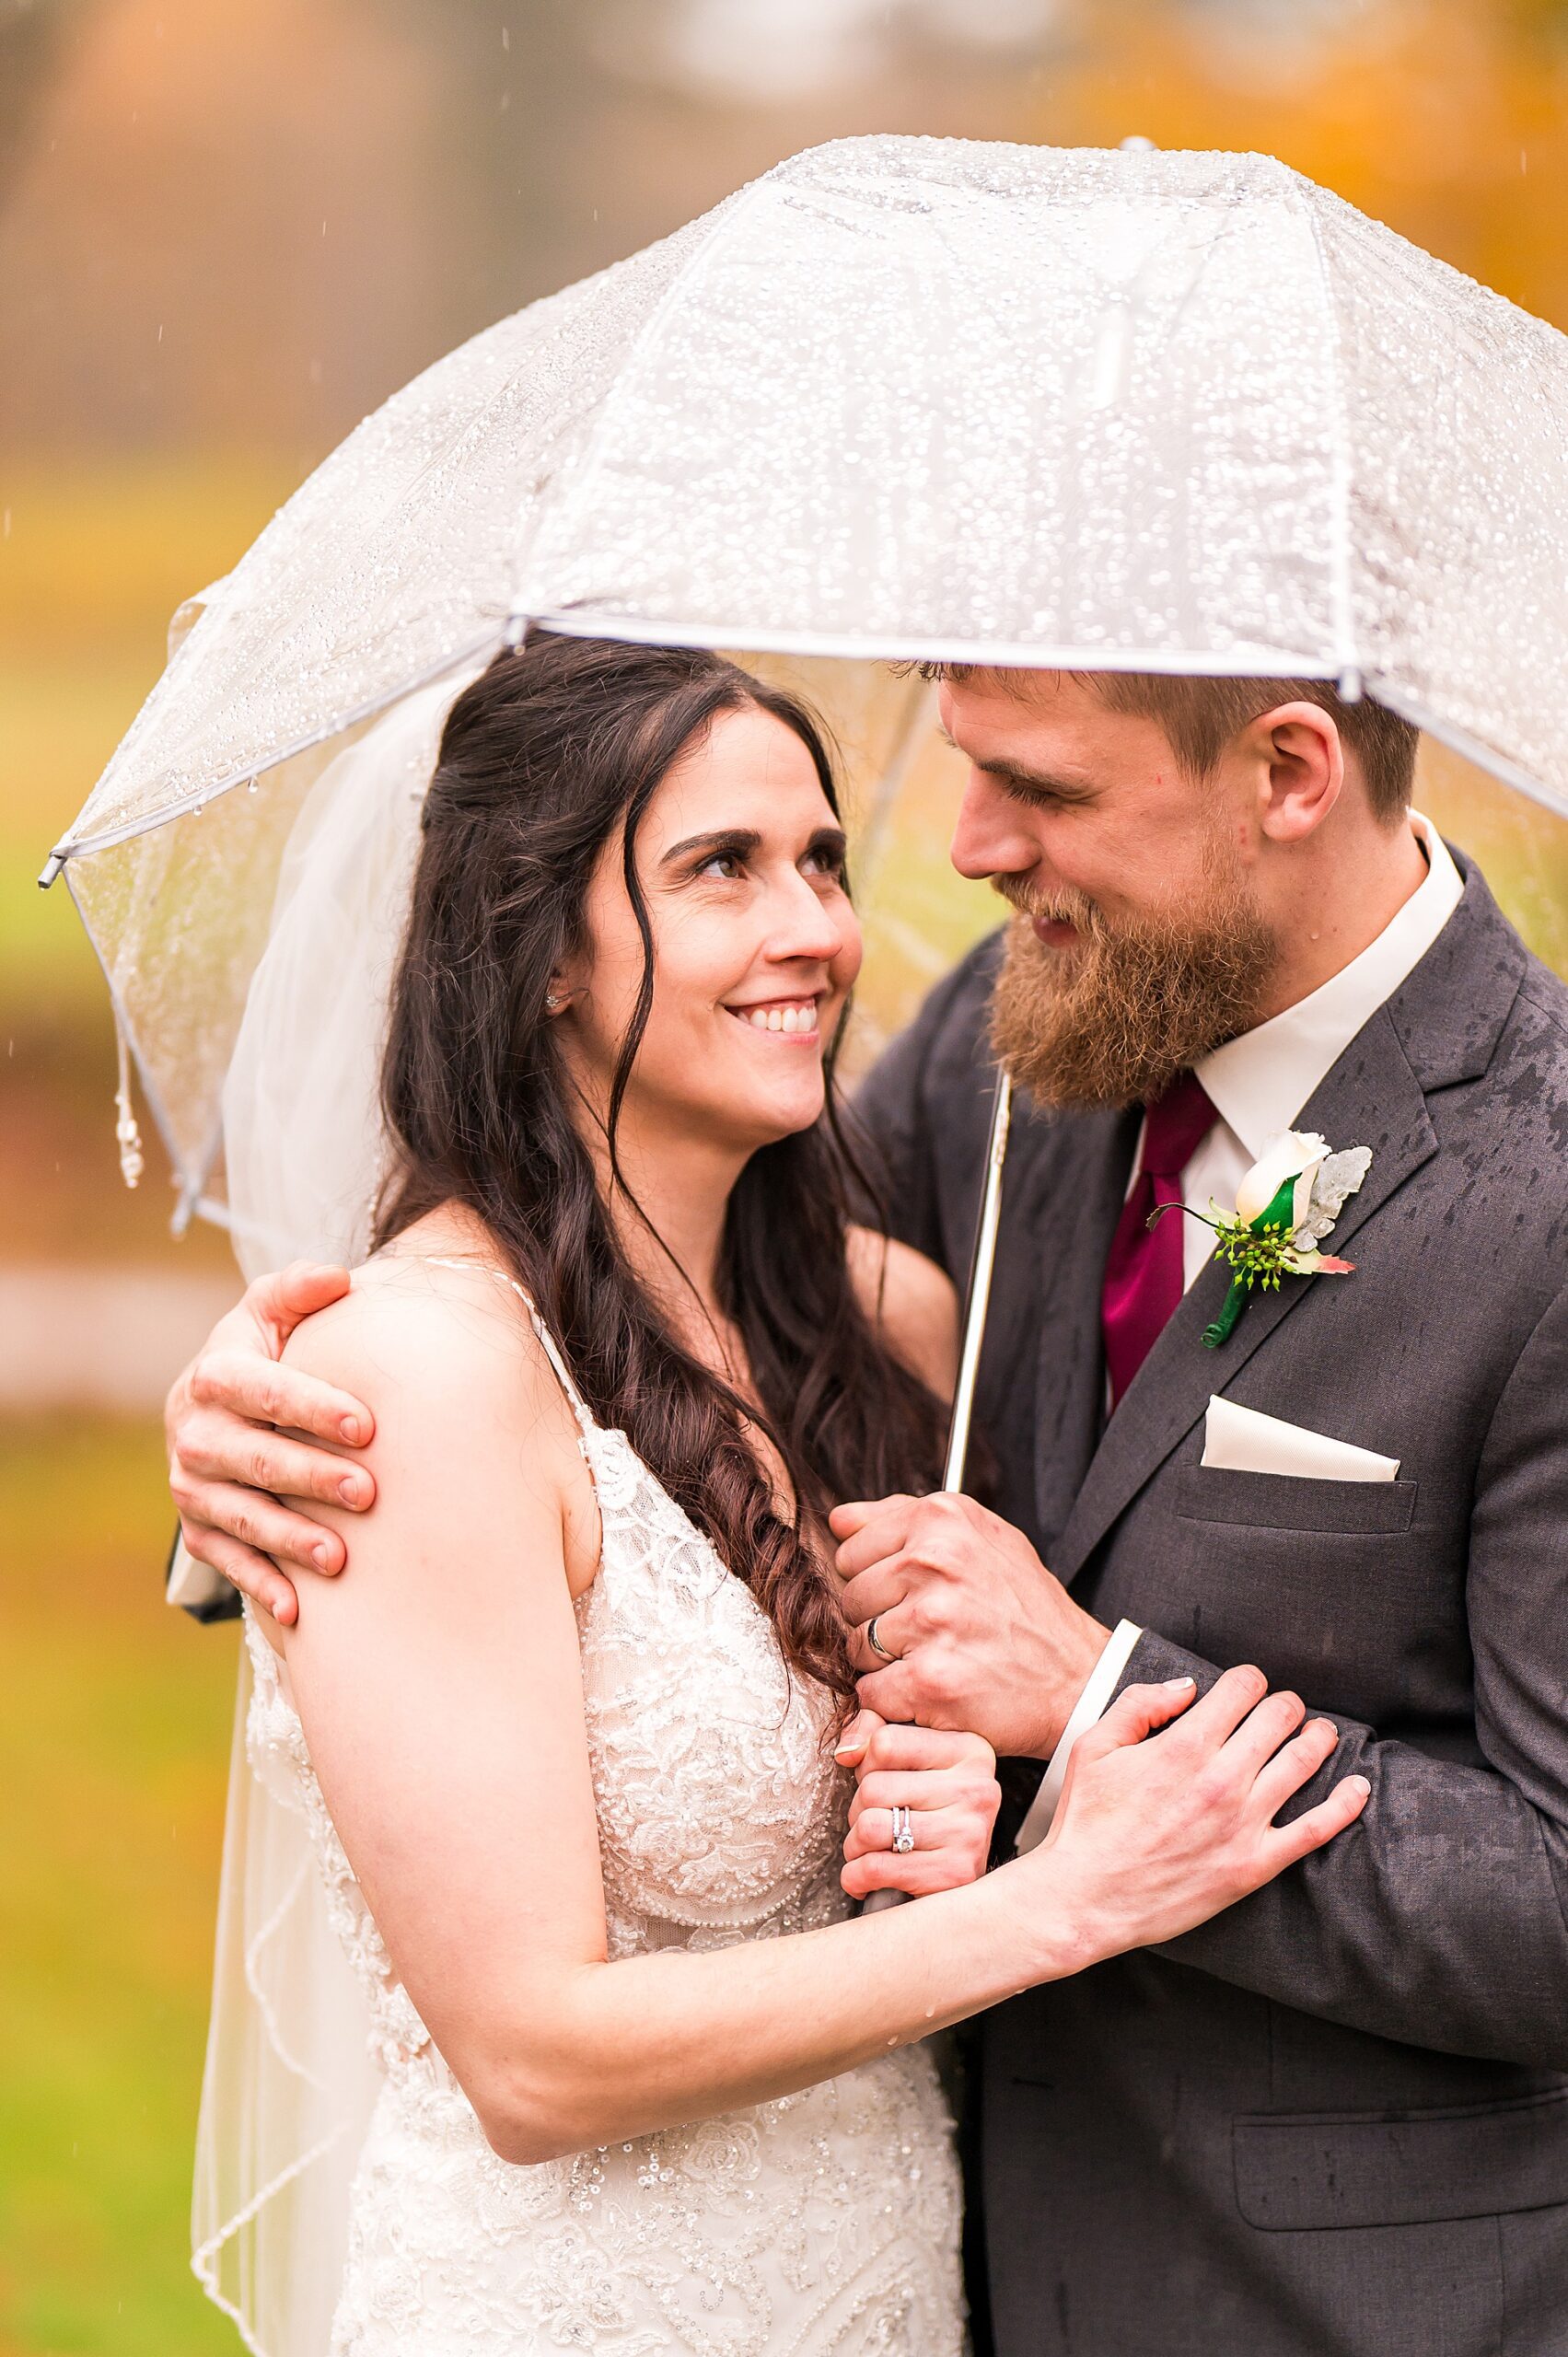 romantic wedding portraits in the rain